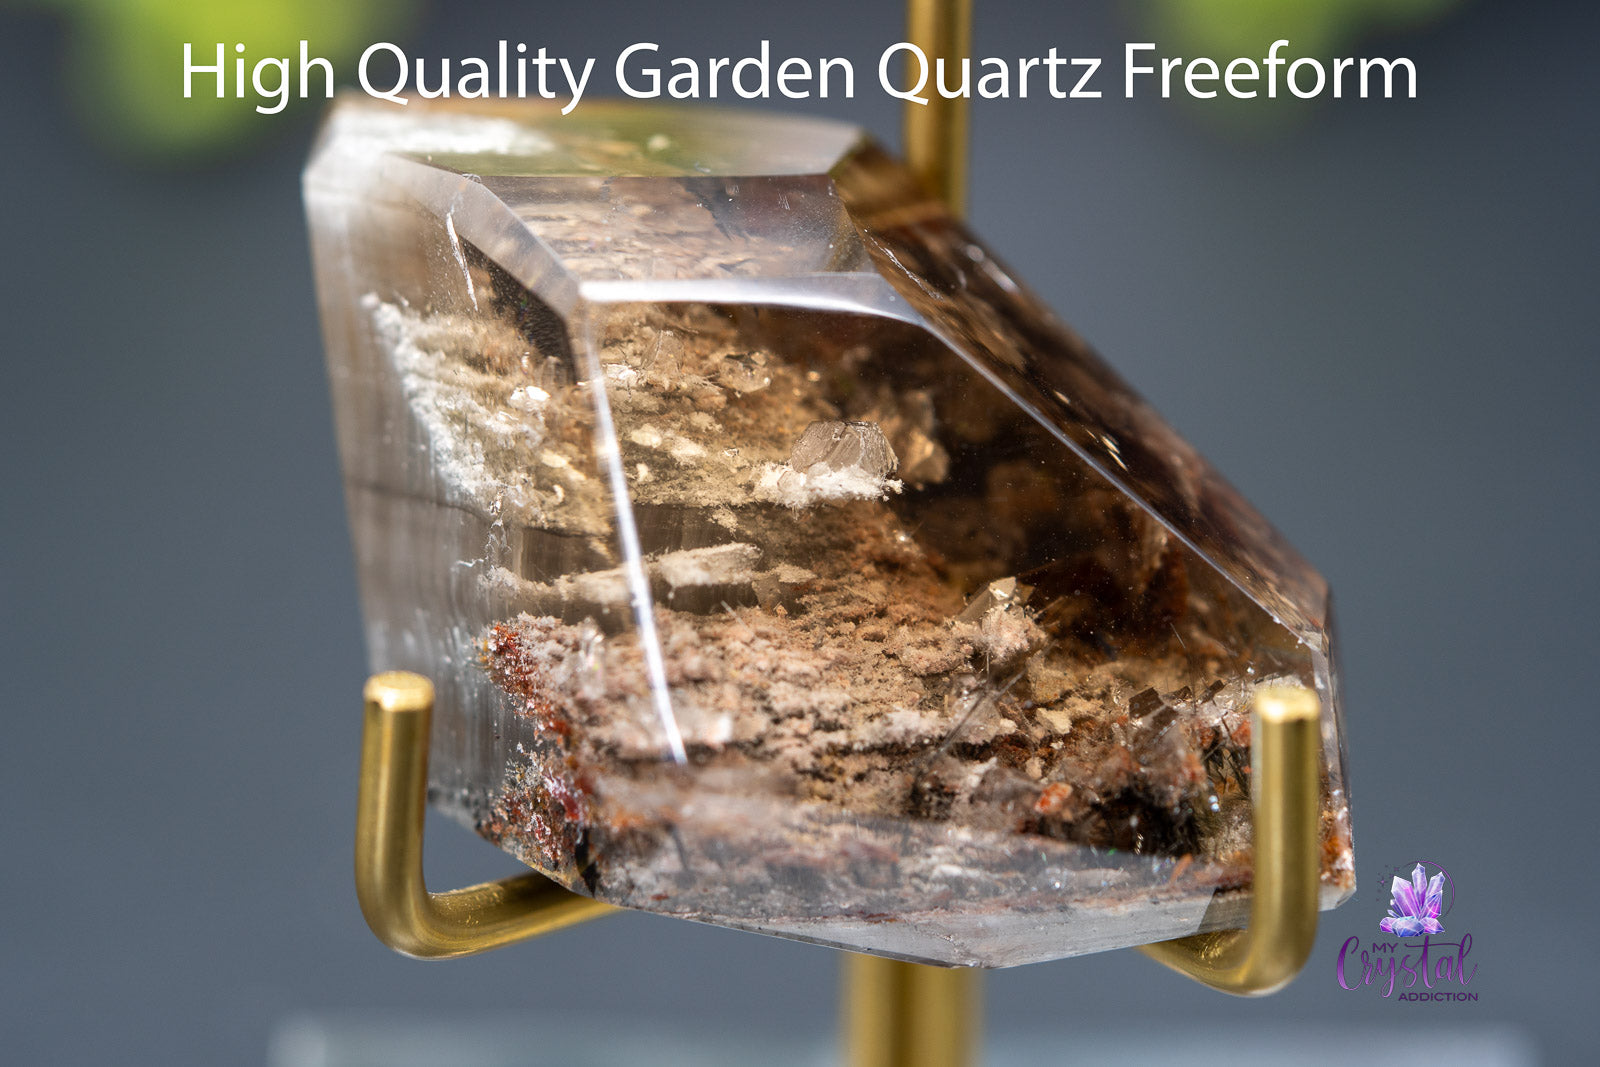 Garden Quartz Freeform 2.5"x1.4"/63mm x 35mm - My Crystal Addiction